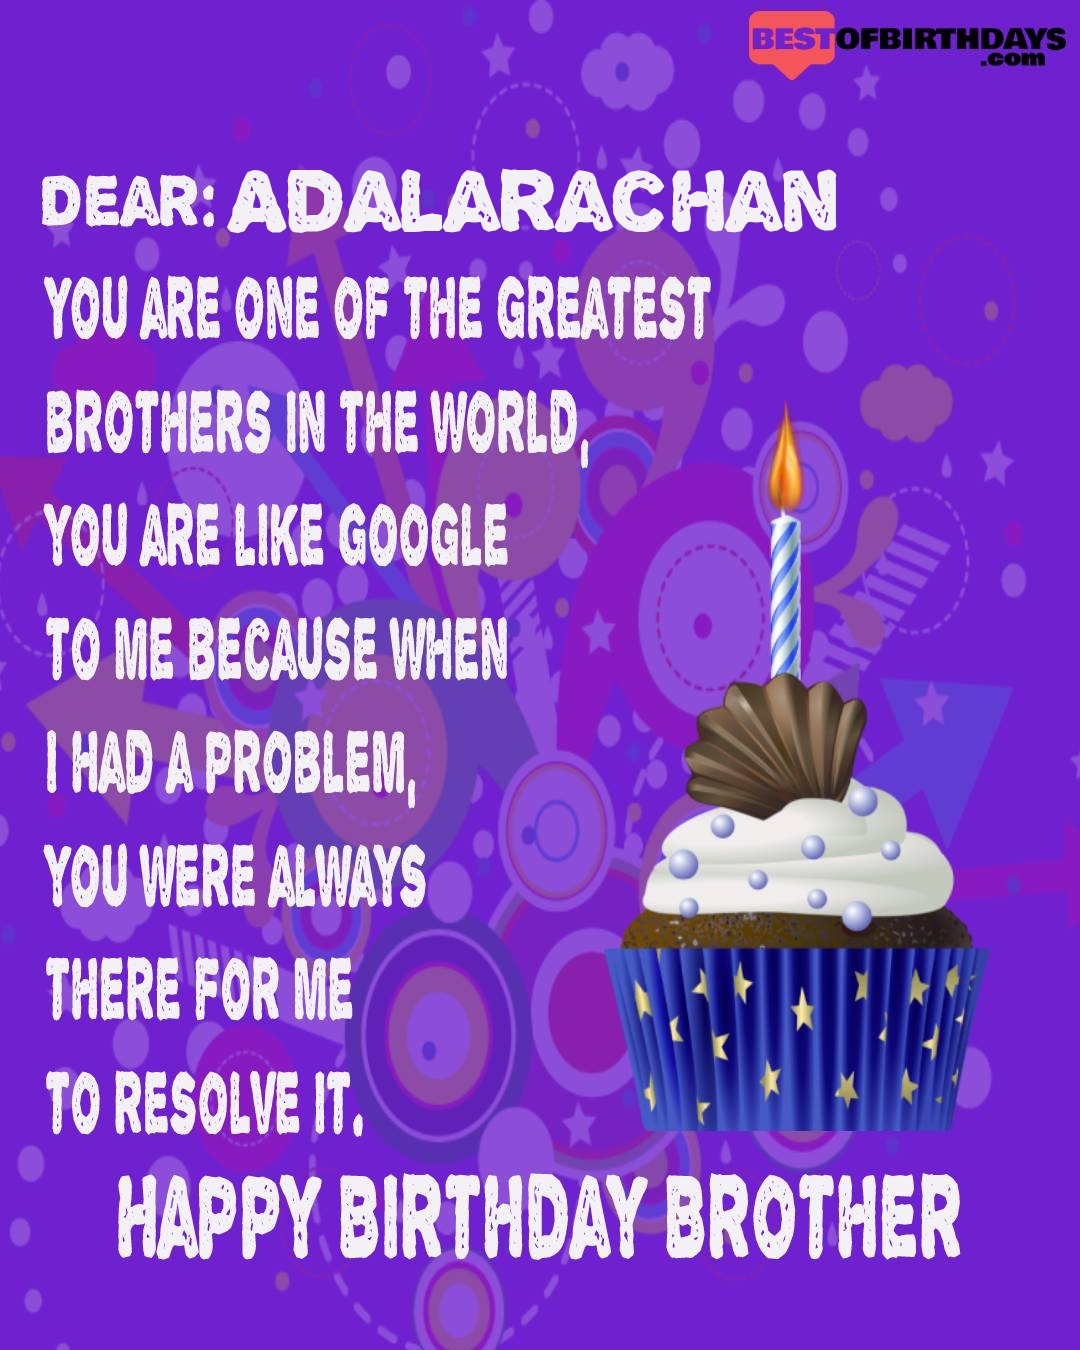 Happy birthday adalarachan bhai brother bro